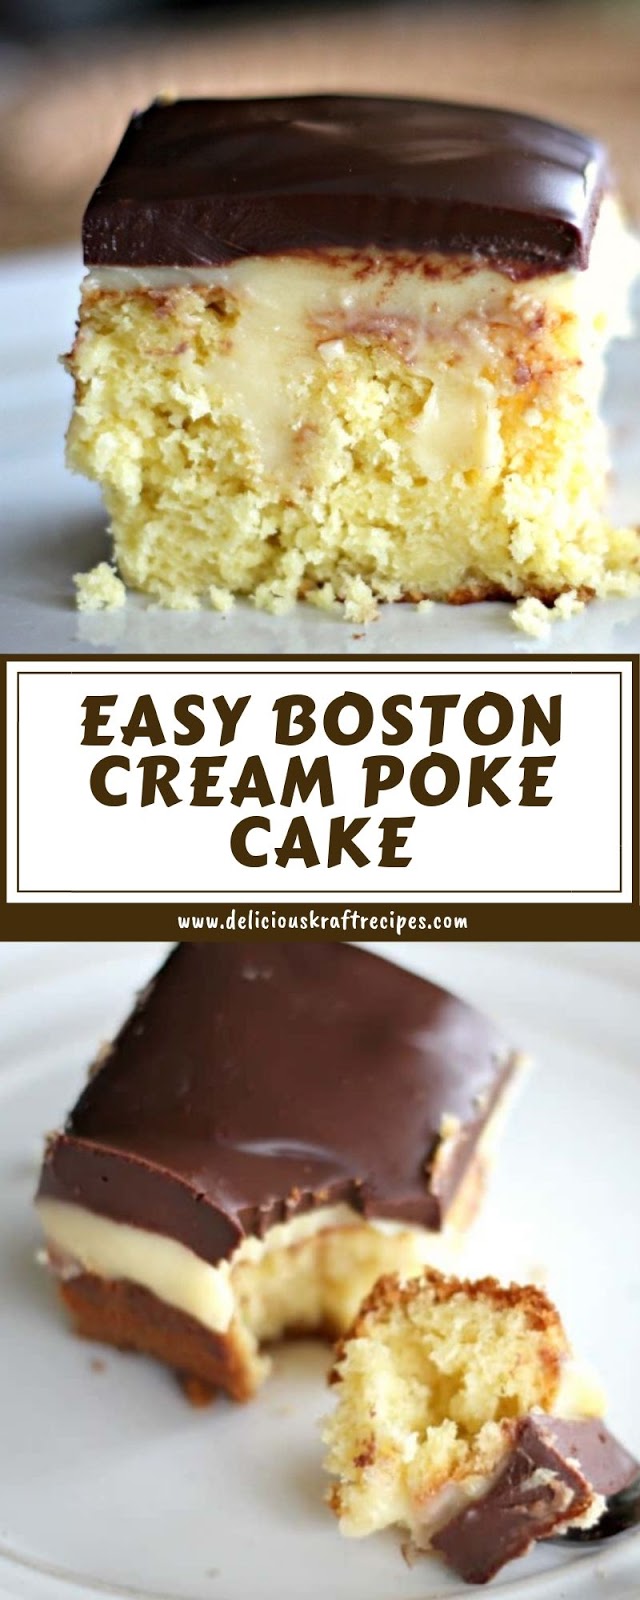 EASY BOSTON CREAM POKE CAKE